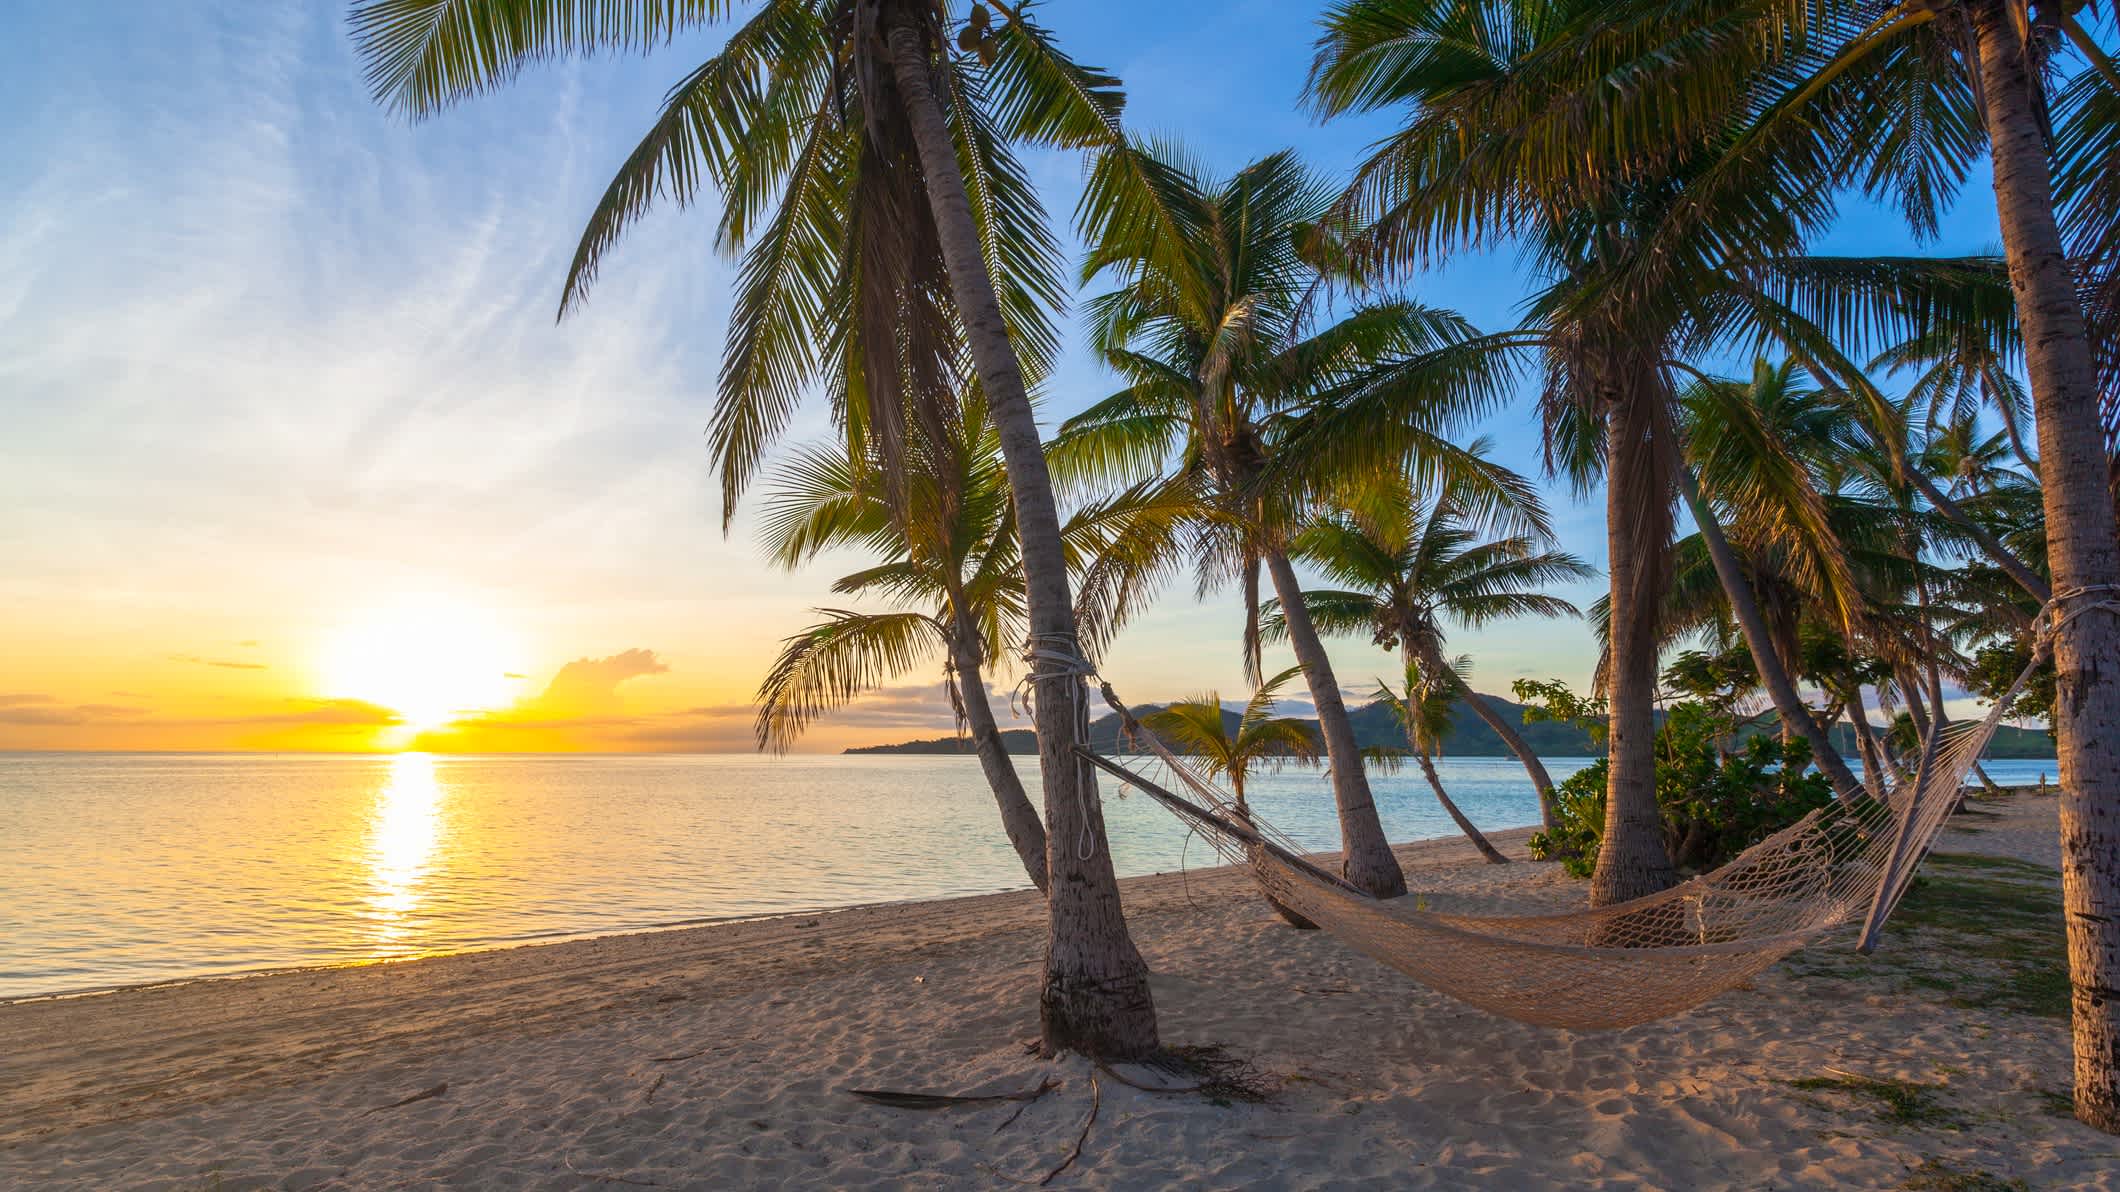 Sonnenuntergang am Strand auf Fidschi.

